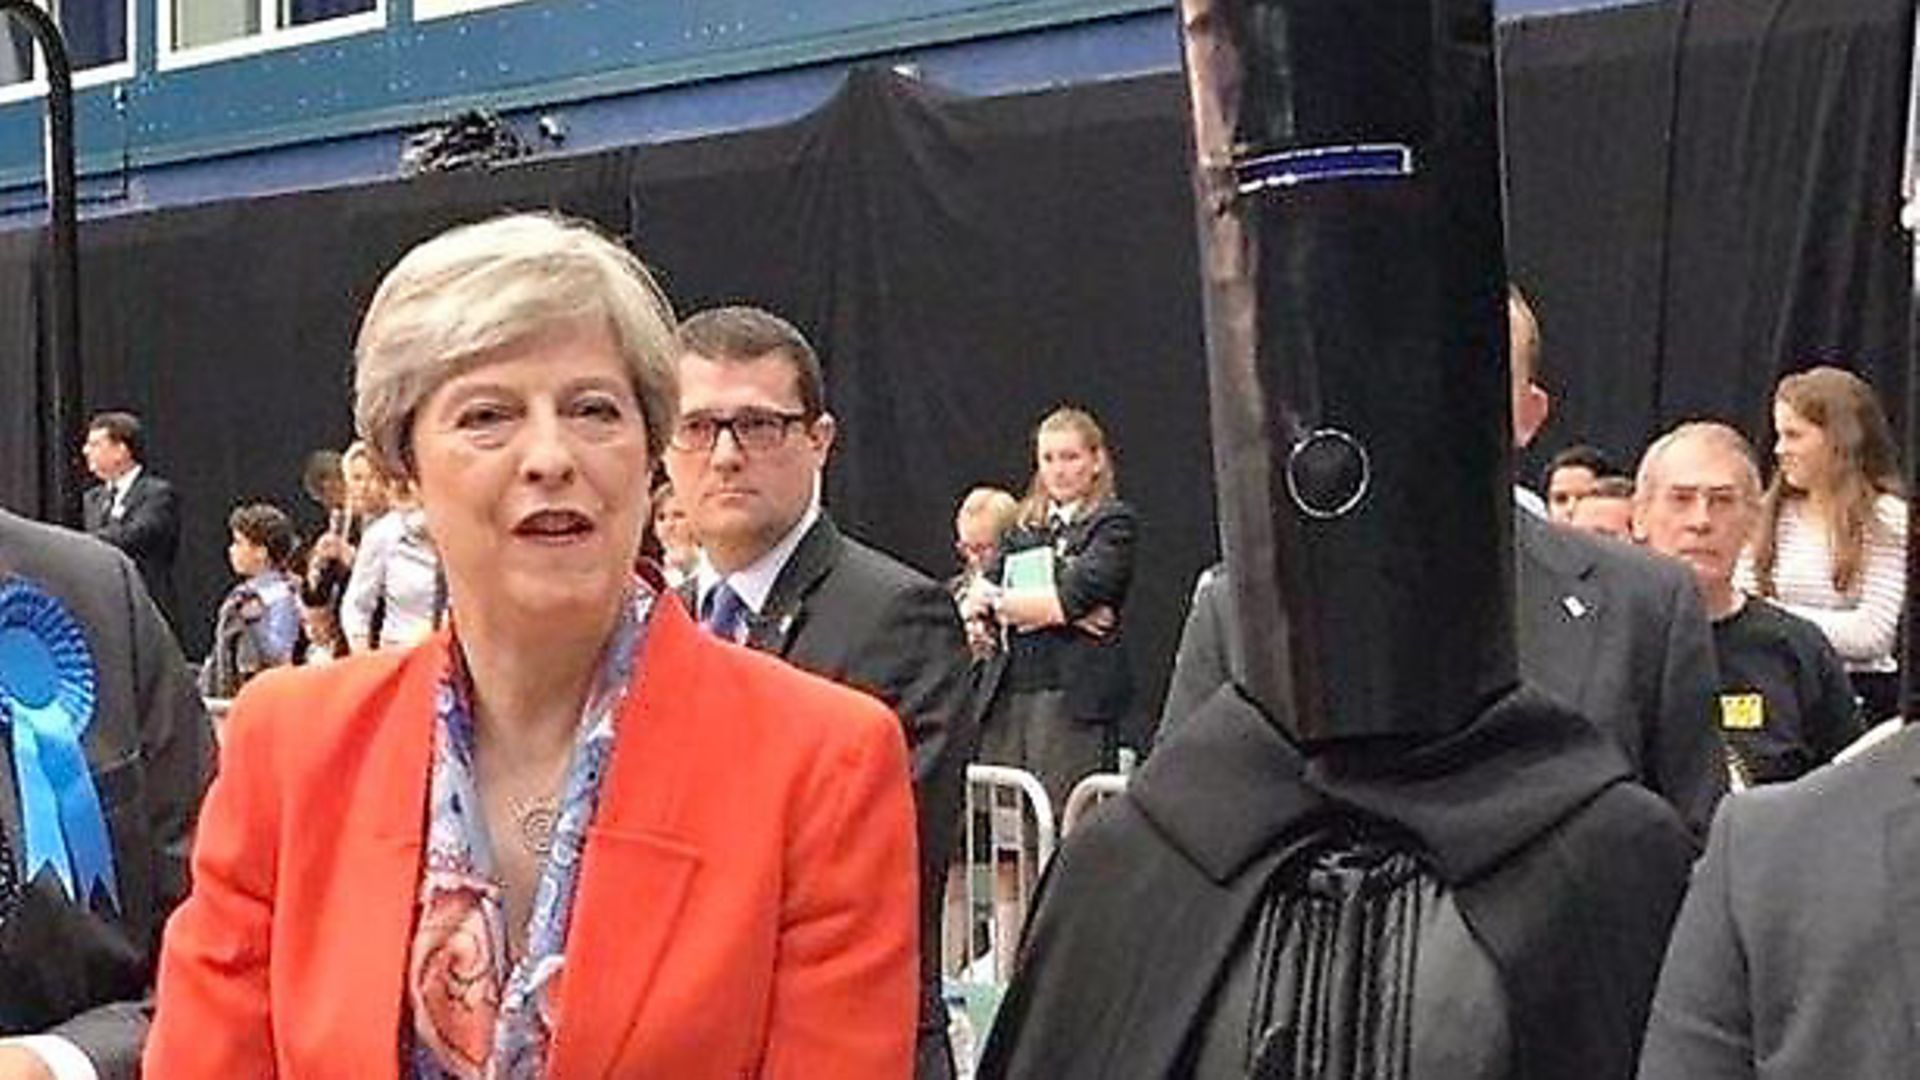 Lord Buckethead alongside Theresa May. Photograph: PA. - Credit: Archant